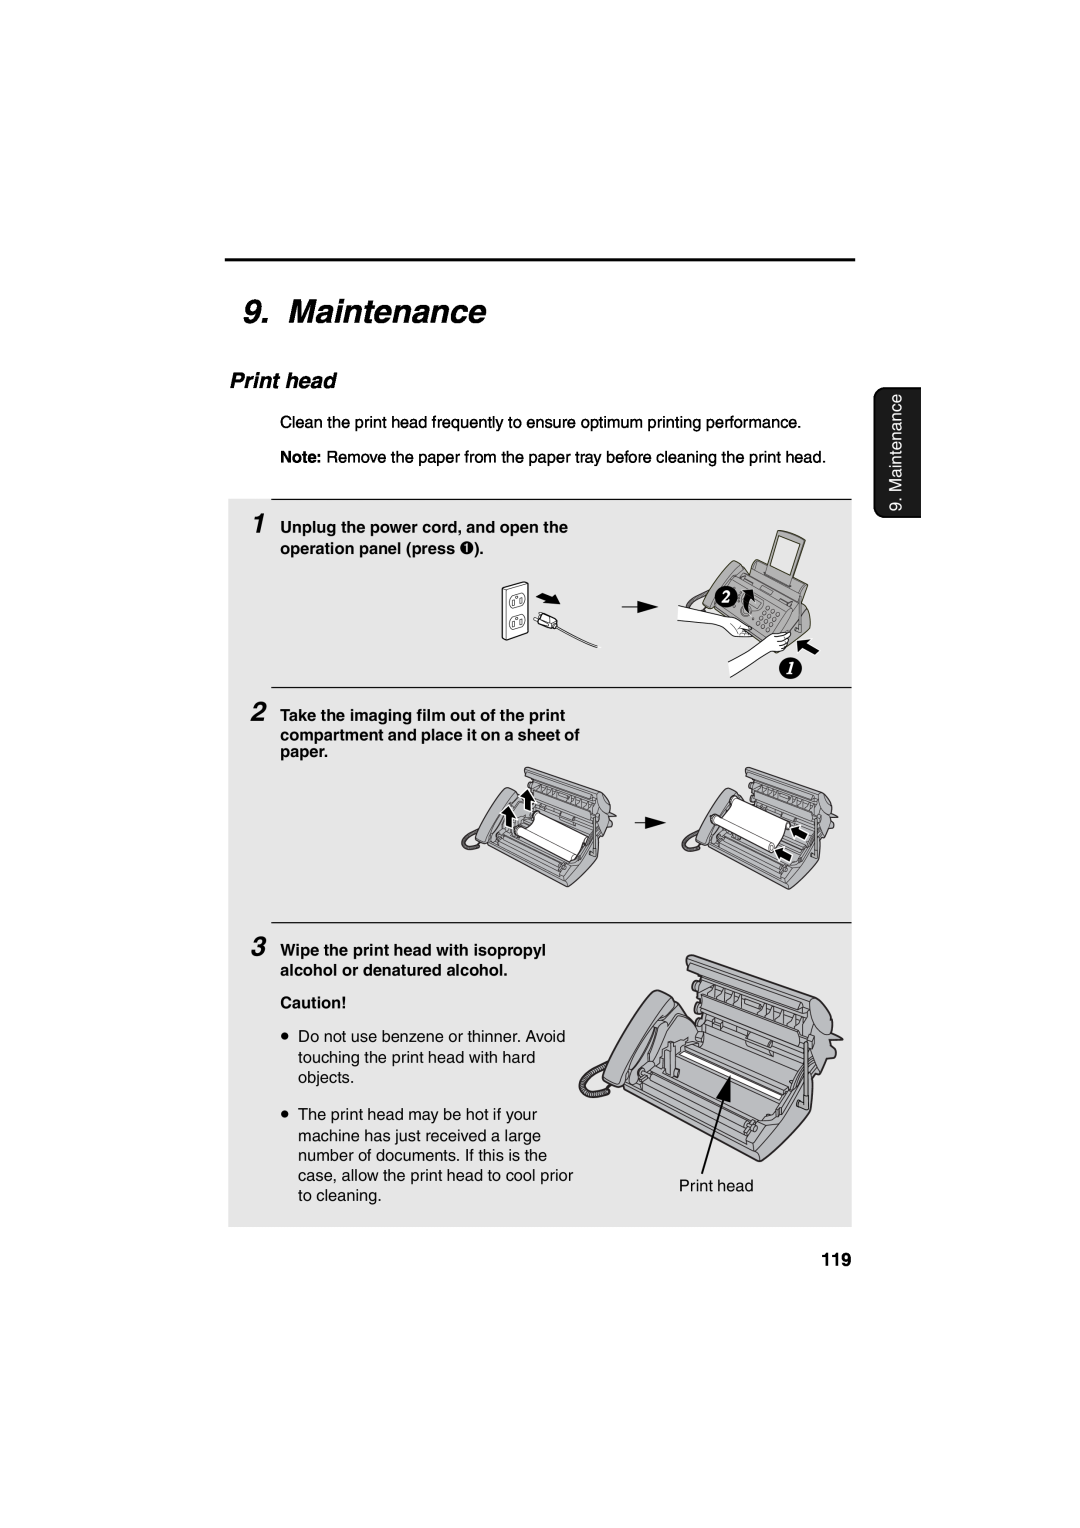 Sharp UX-CD600 operation manual Maintenance, Print head 